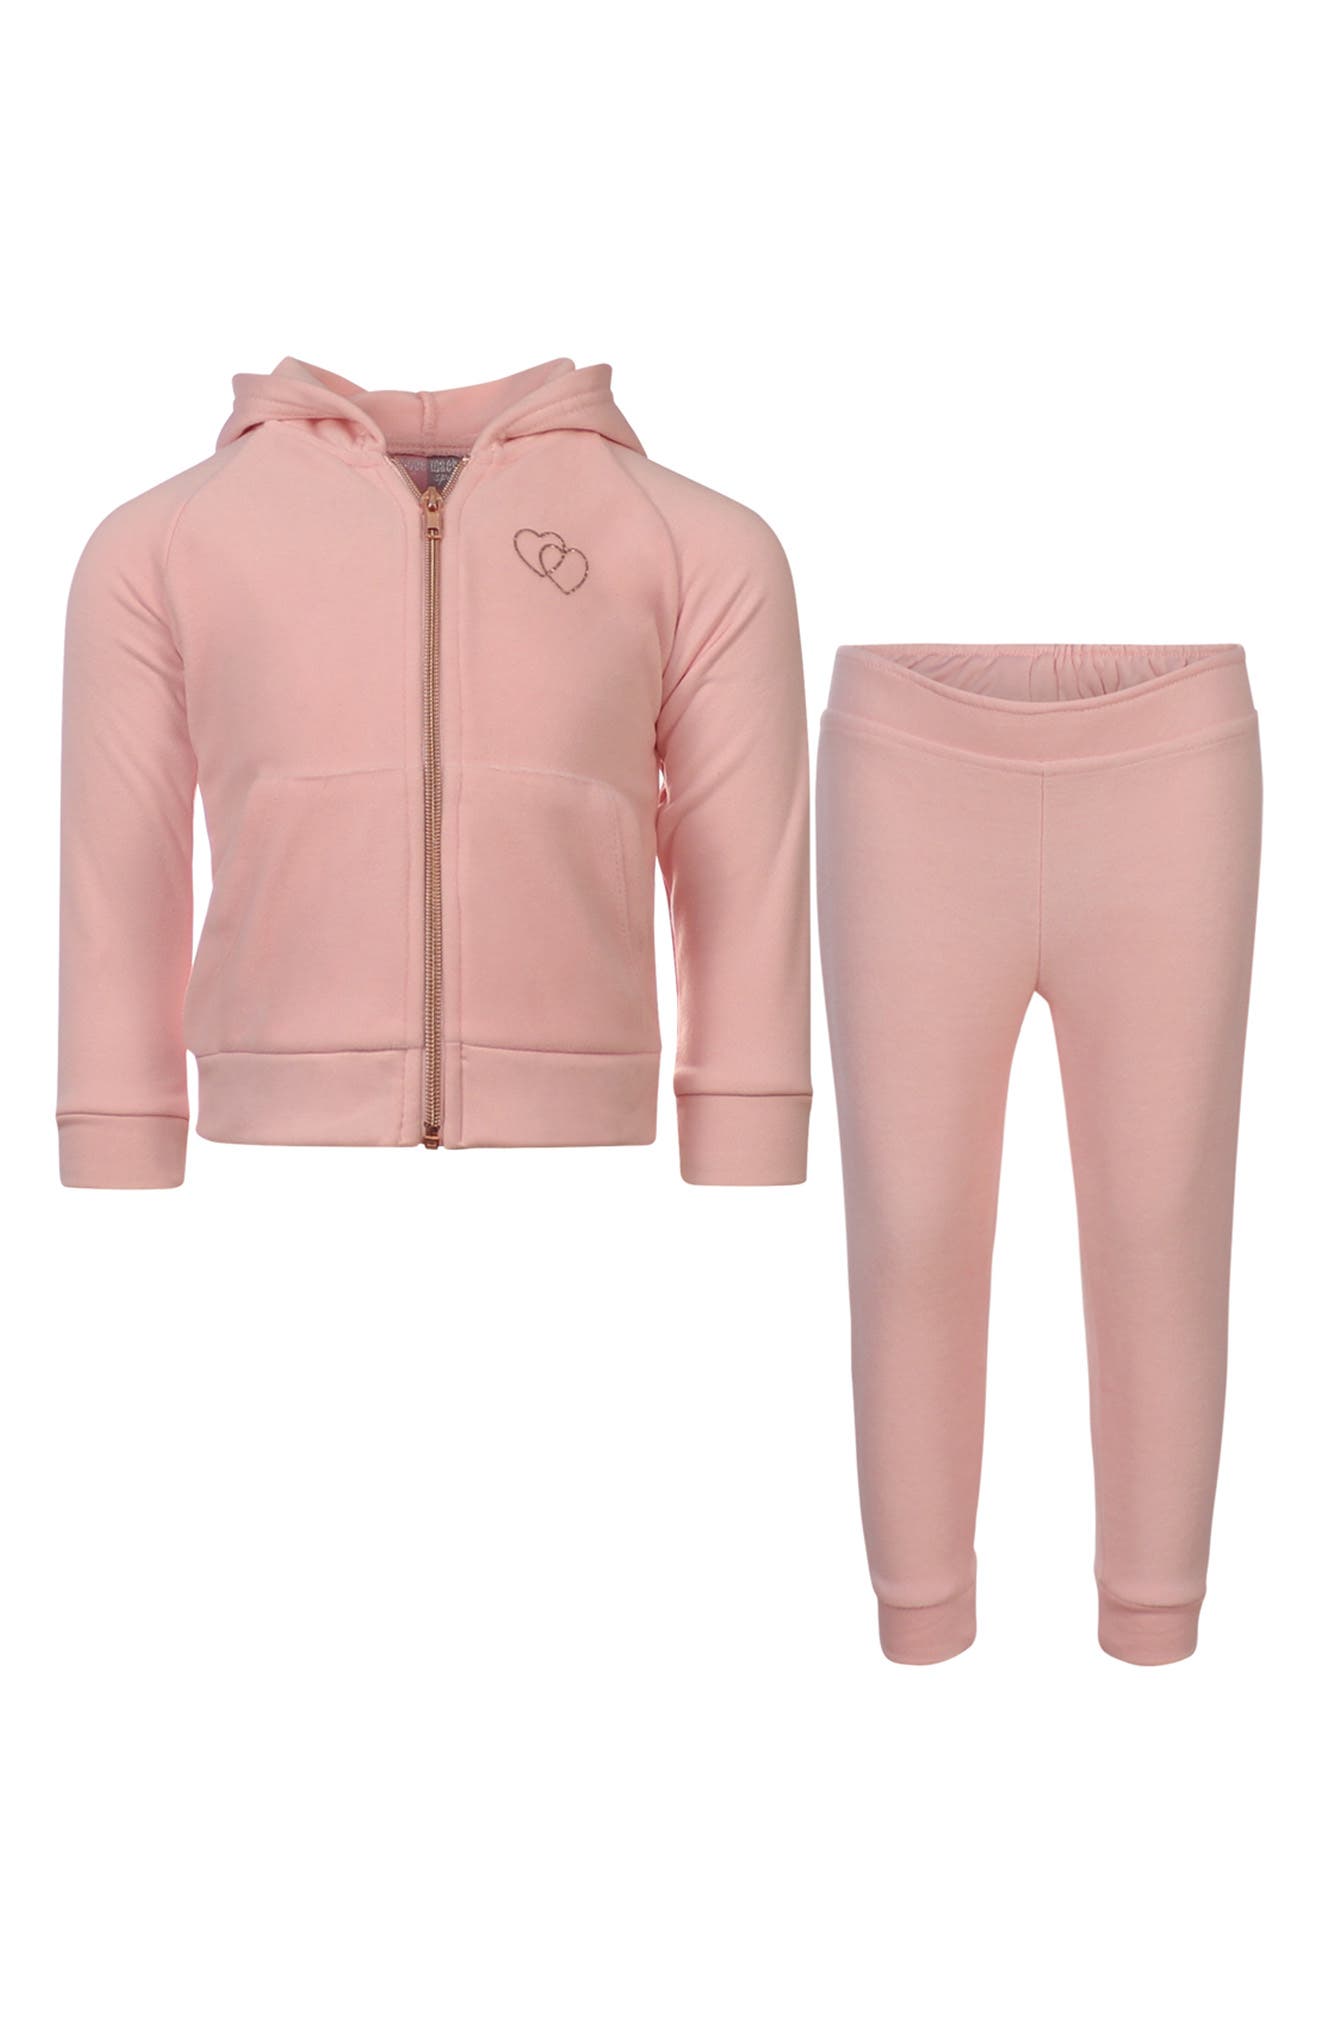 Penelope Mack Babies' Zip Front Jacket & Pants Set In Rose